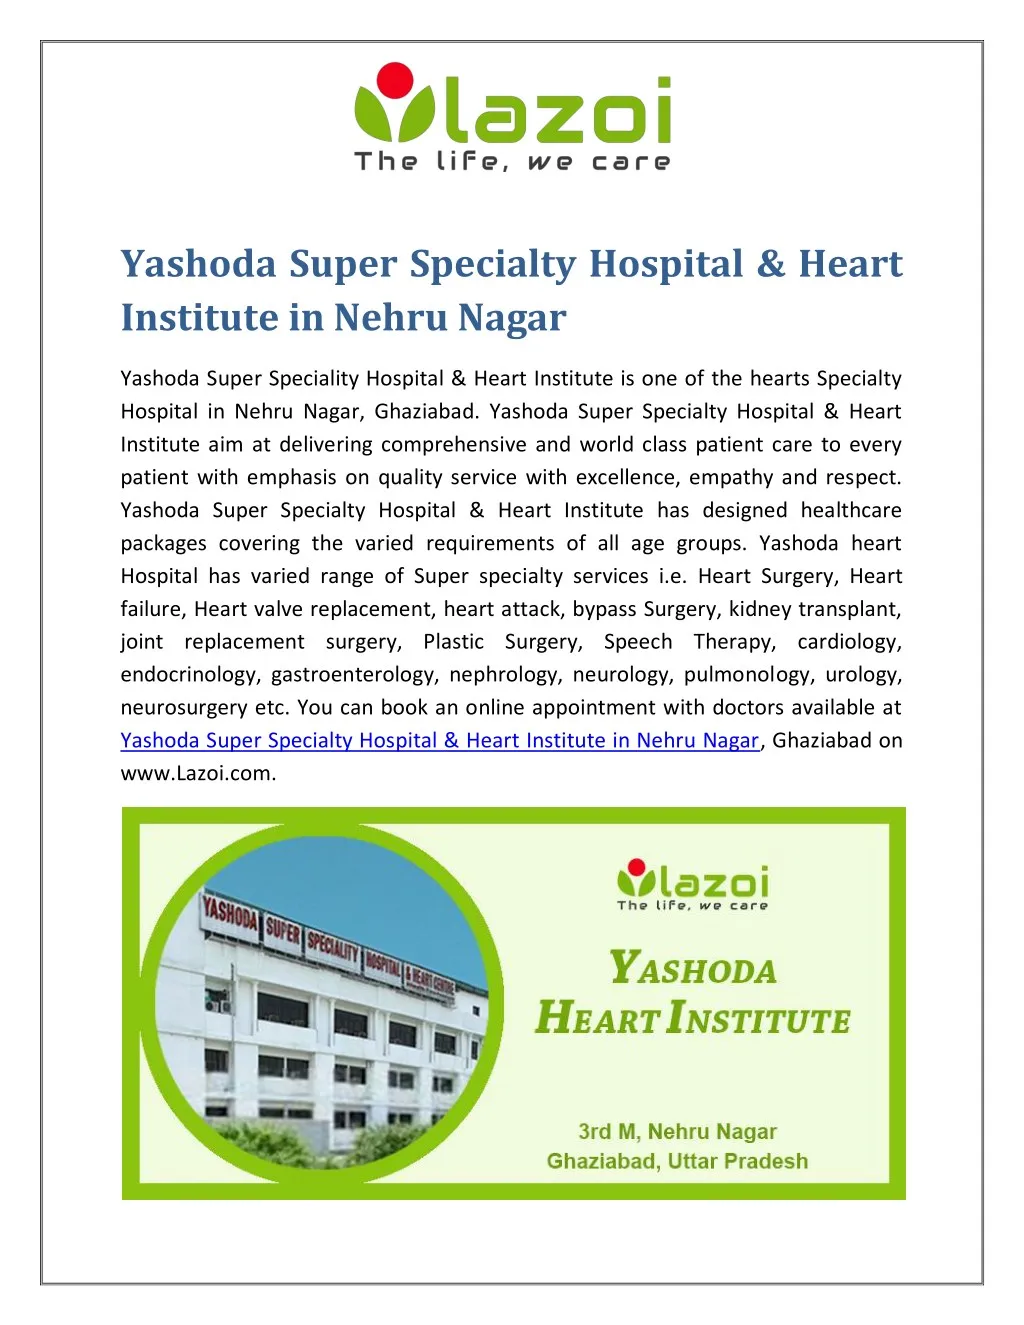 yashoda super specialty hospital heart institute